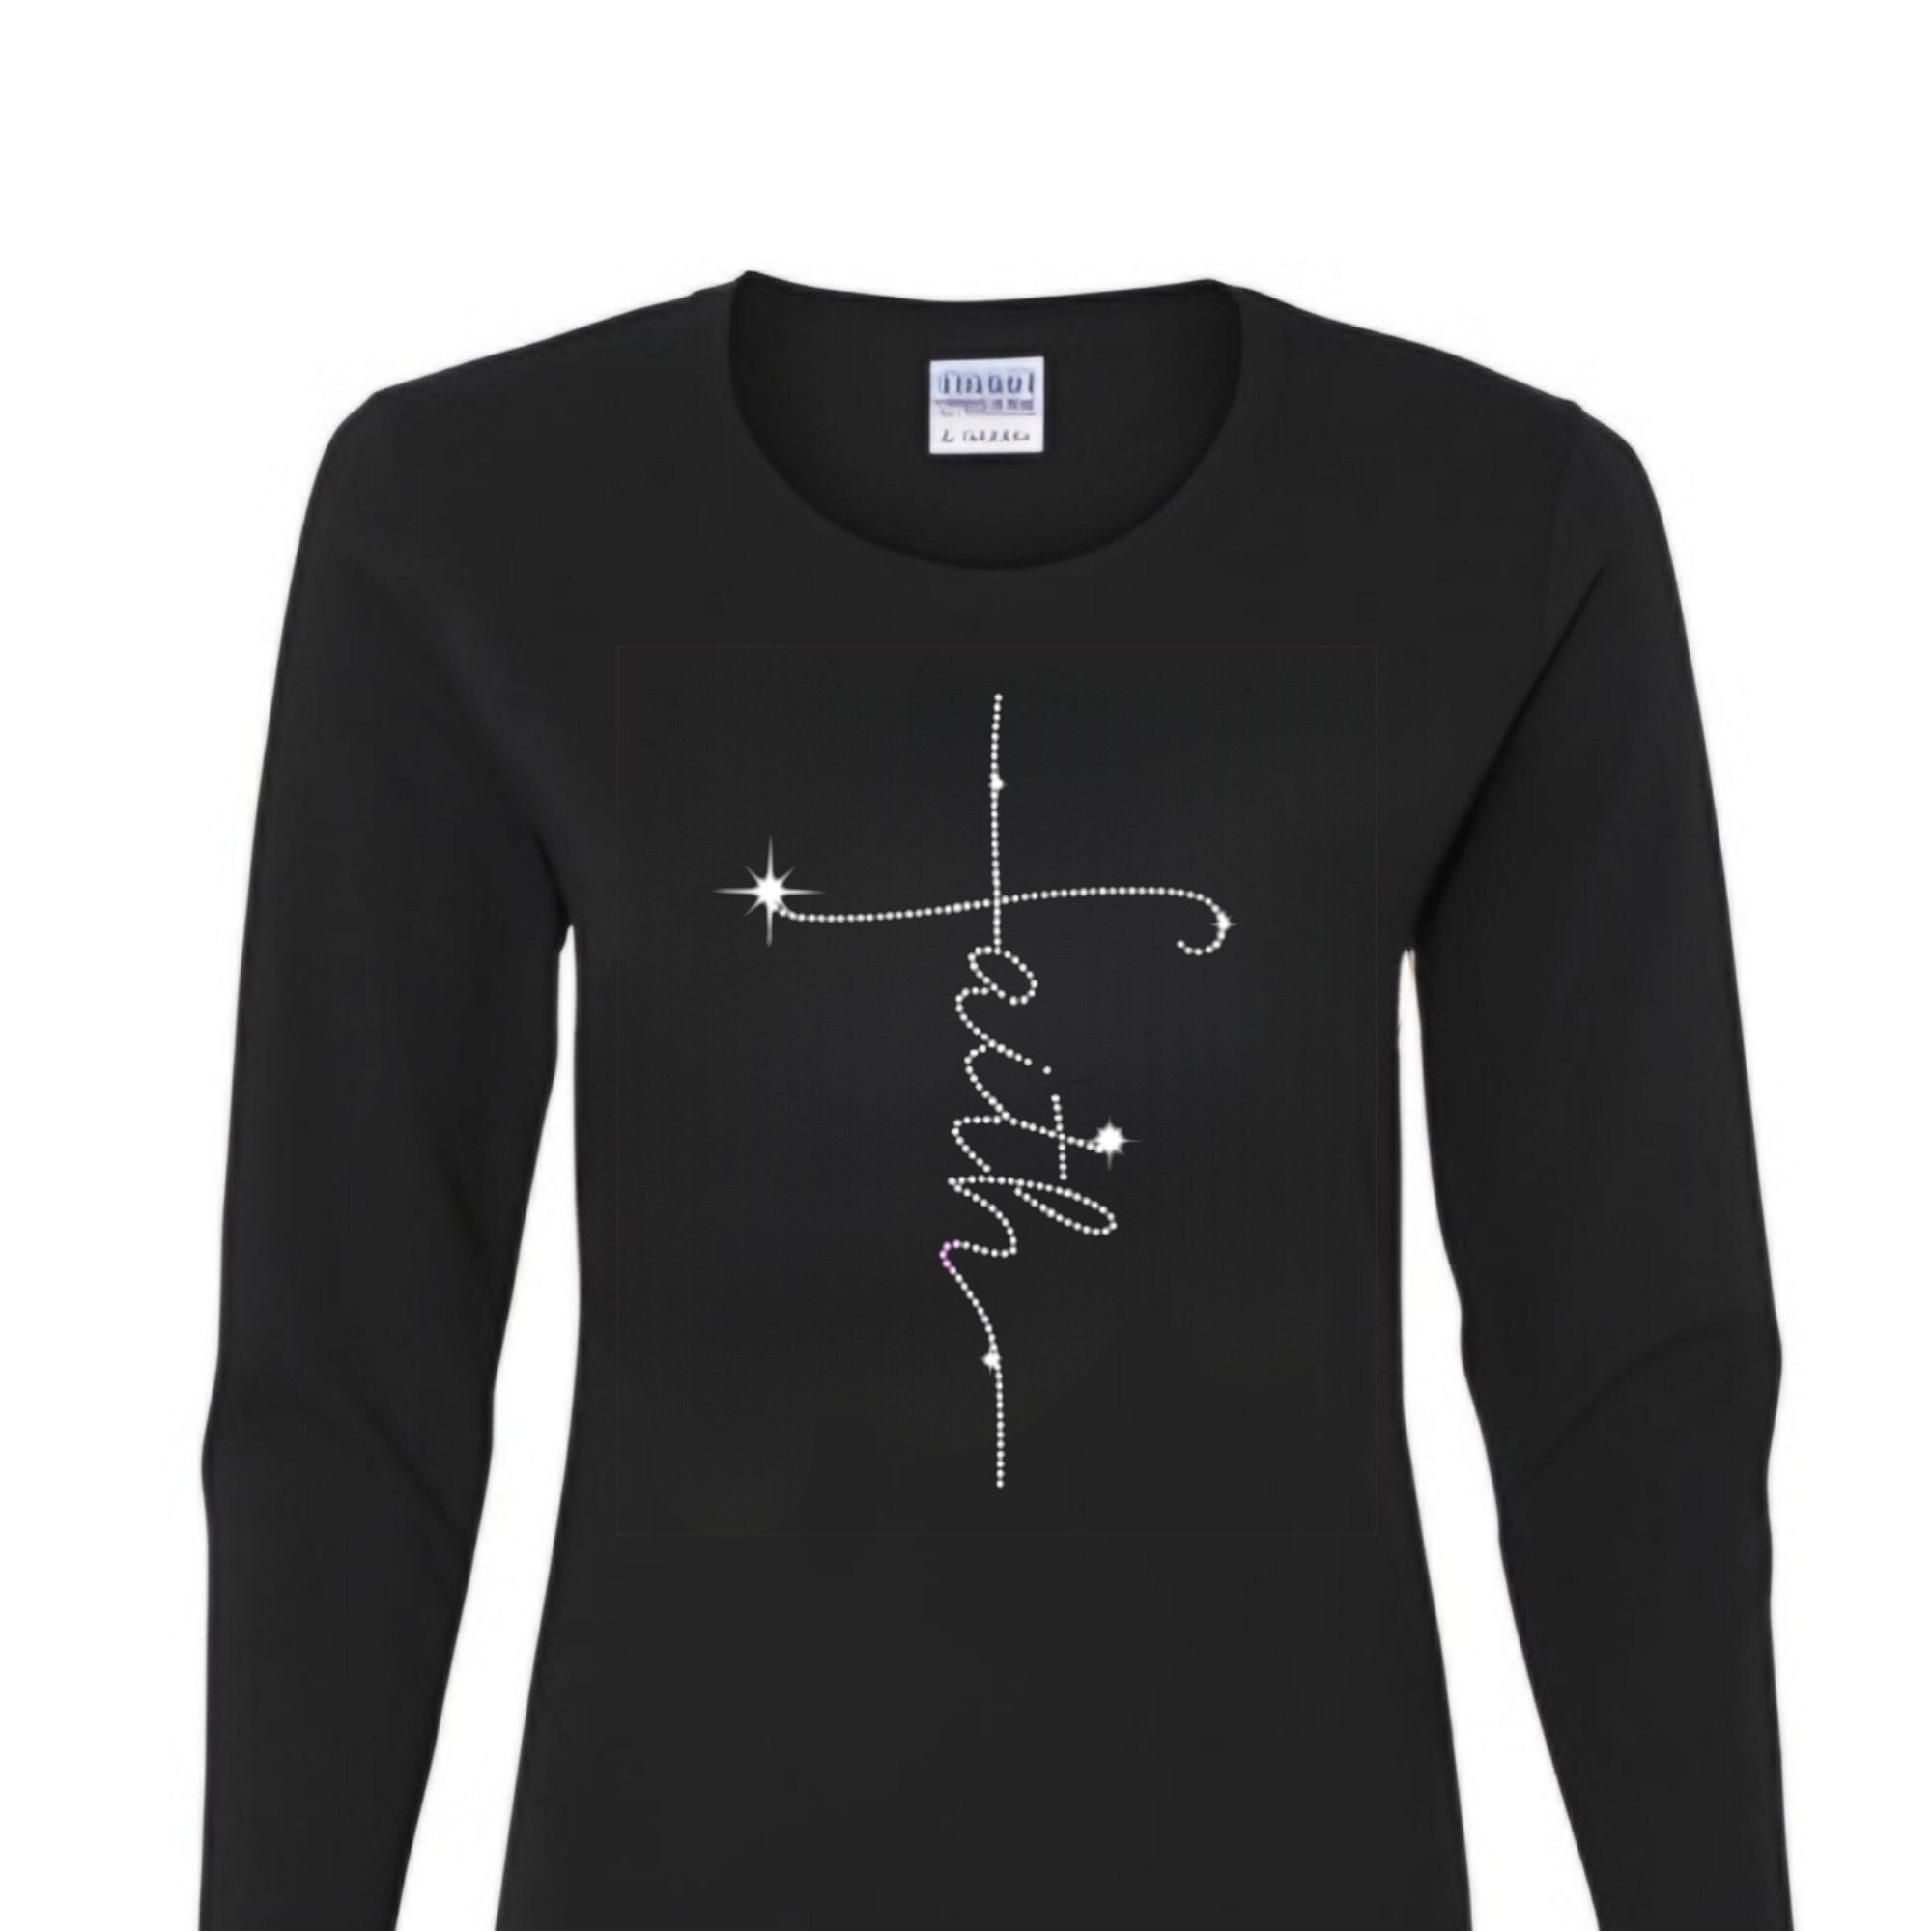 Rhinestone Shirt Faith T Shirt Bedazzled T Shirt Bling Gift Religious ...